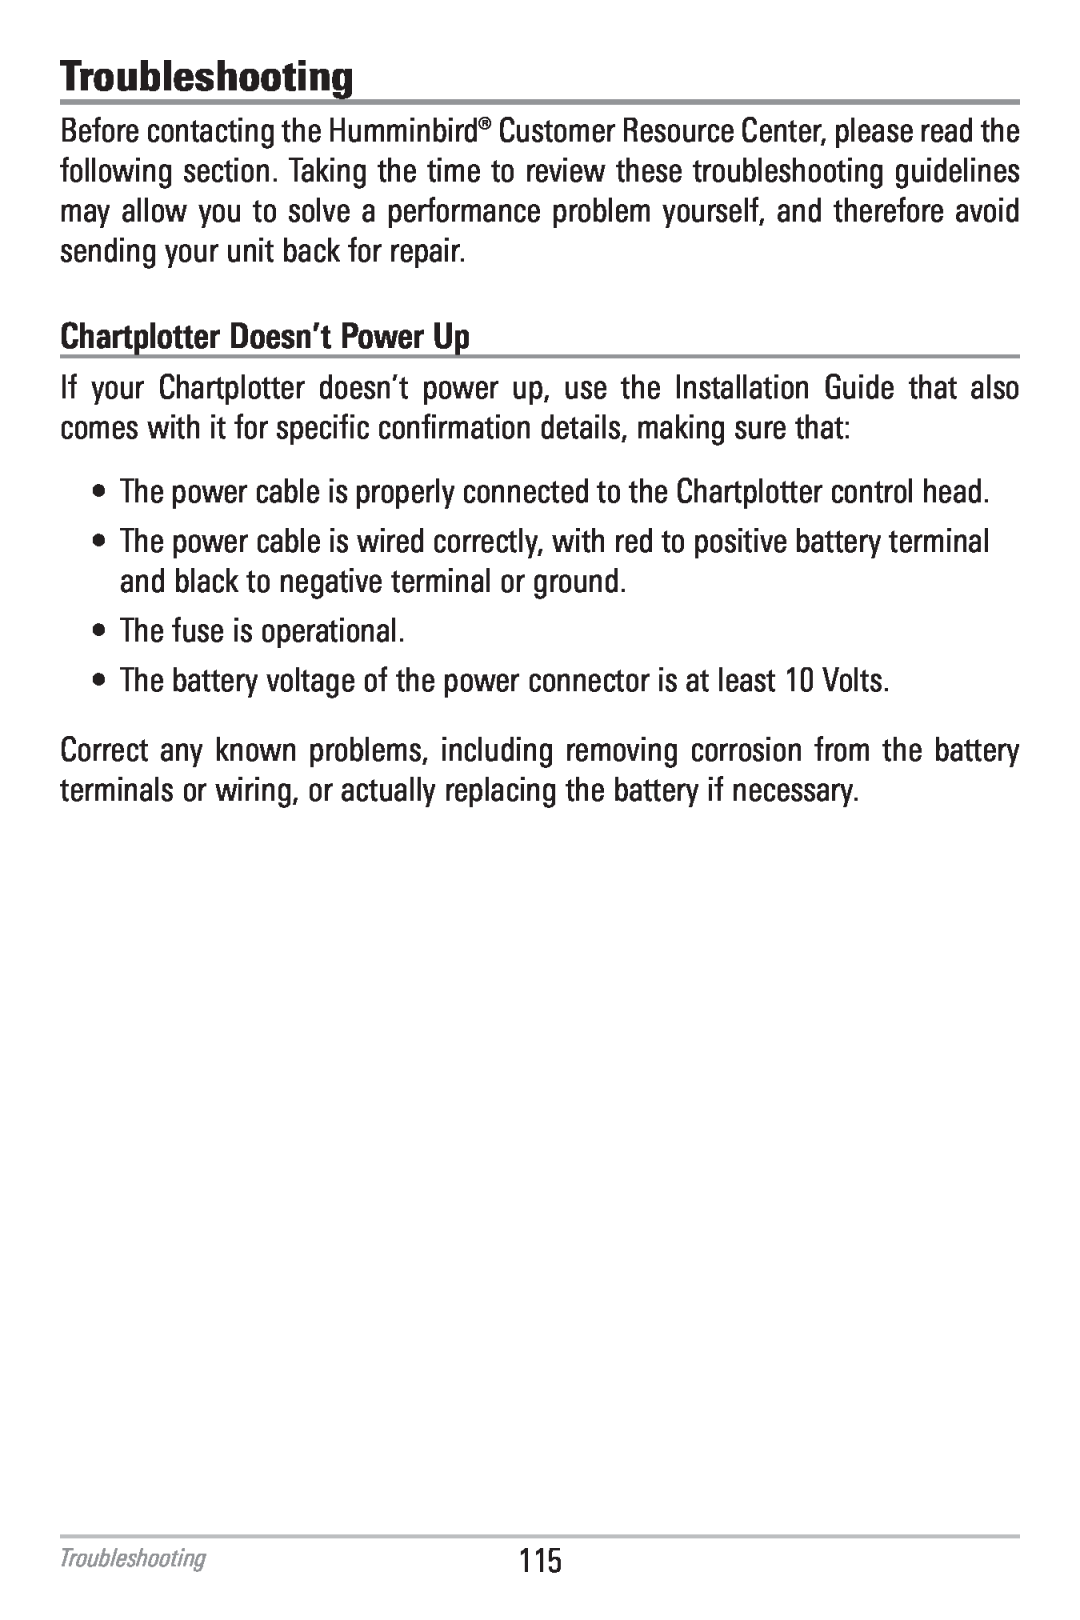 Humminbird 786CI manual Troubleshooting, Chartplotter Doesn’t Power Up 